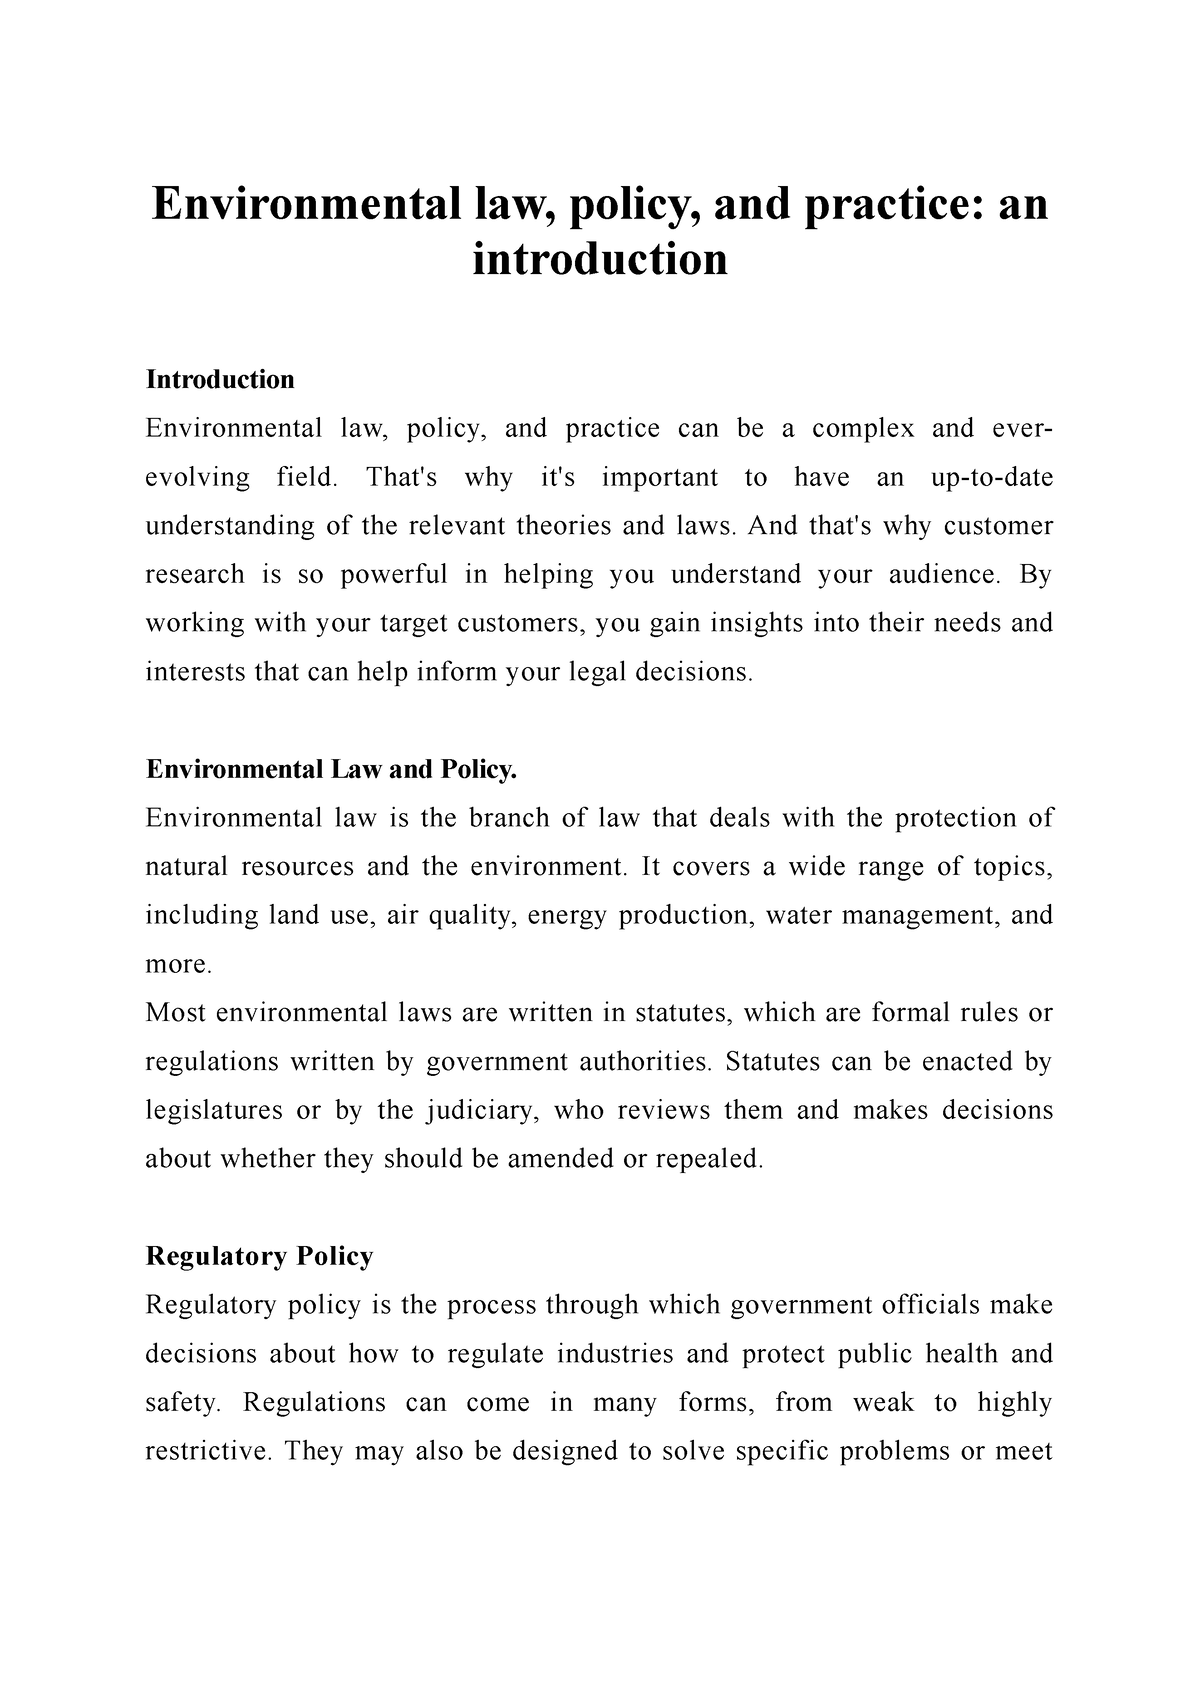 write an essay on environmental laws